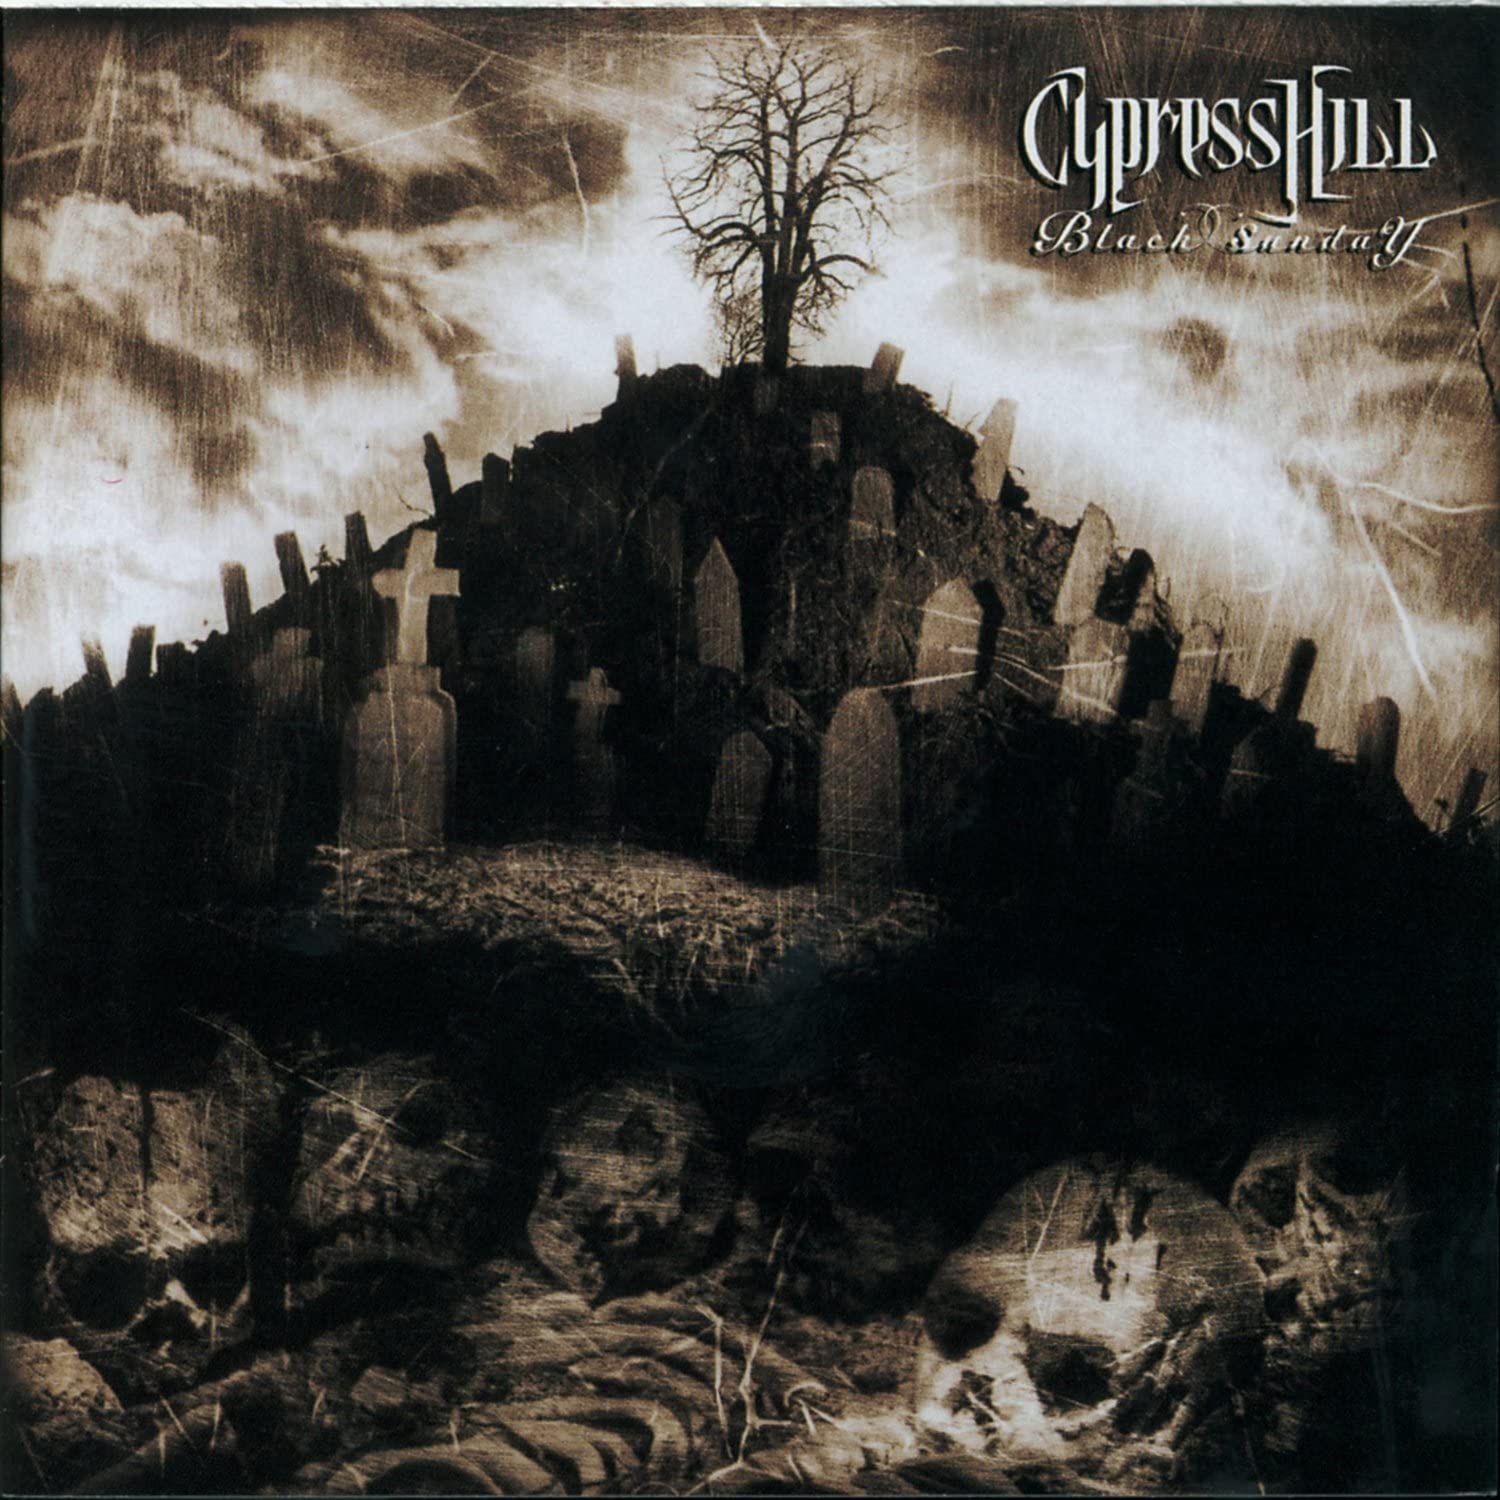 Cypress Hill_album_Black Sunday